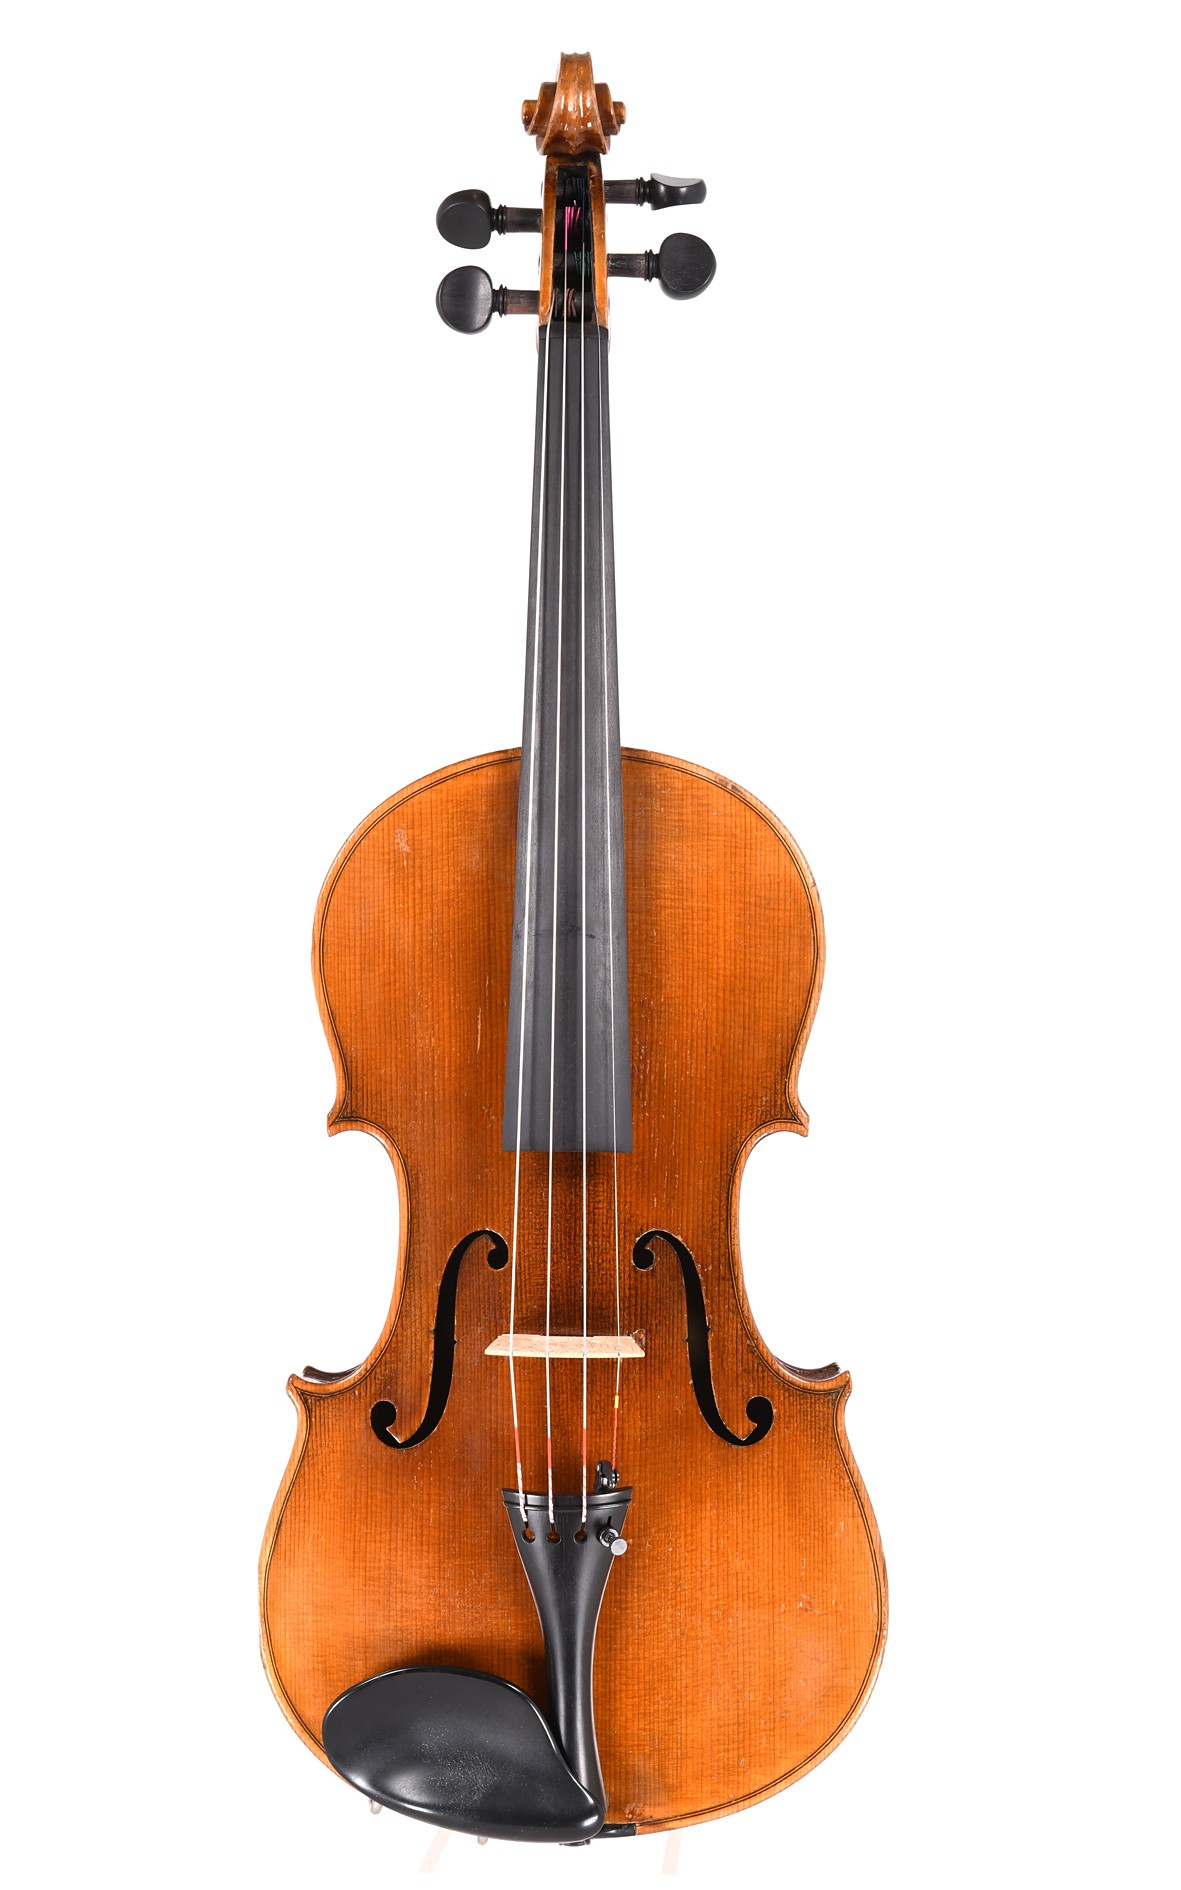 Antique Saxon violin, circa 1920 - top